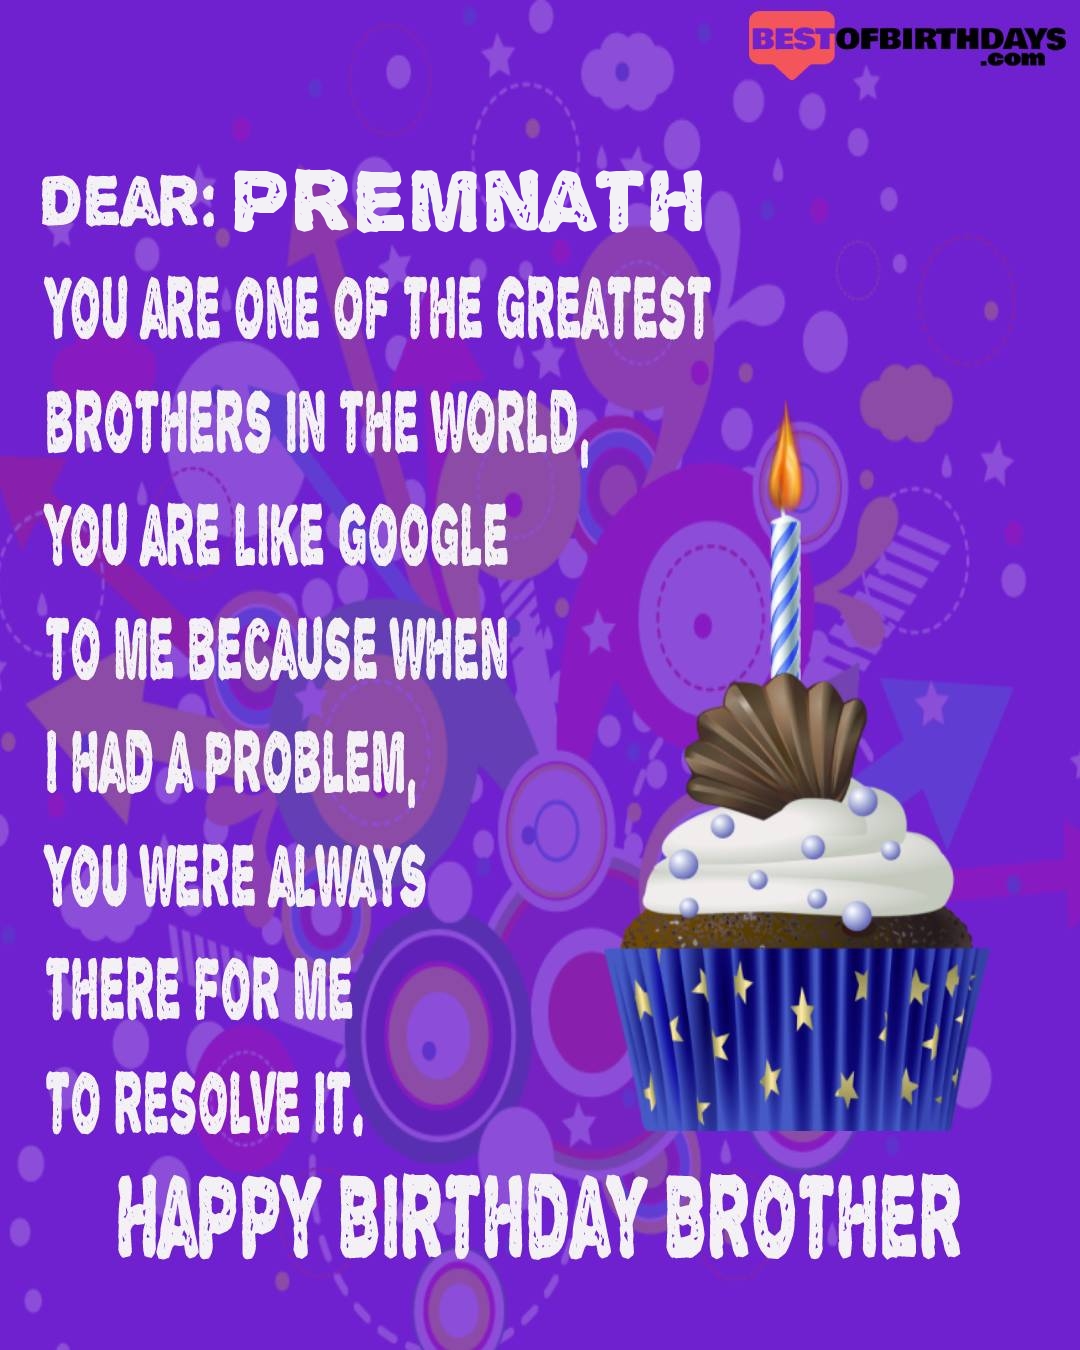 Happy birthday premnath bhai brother bro